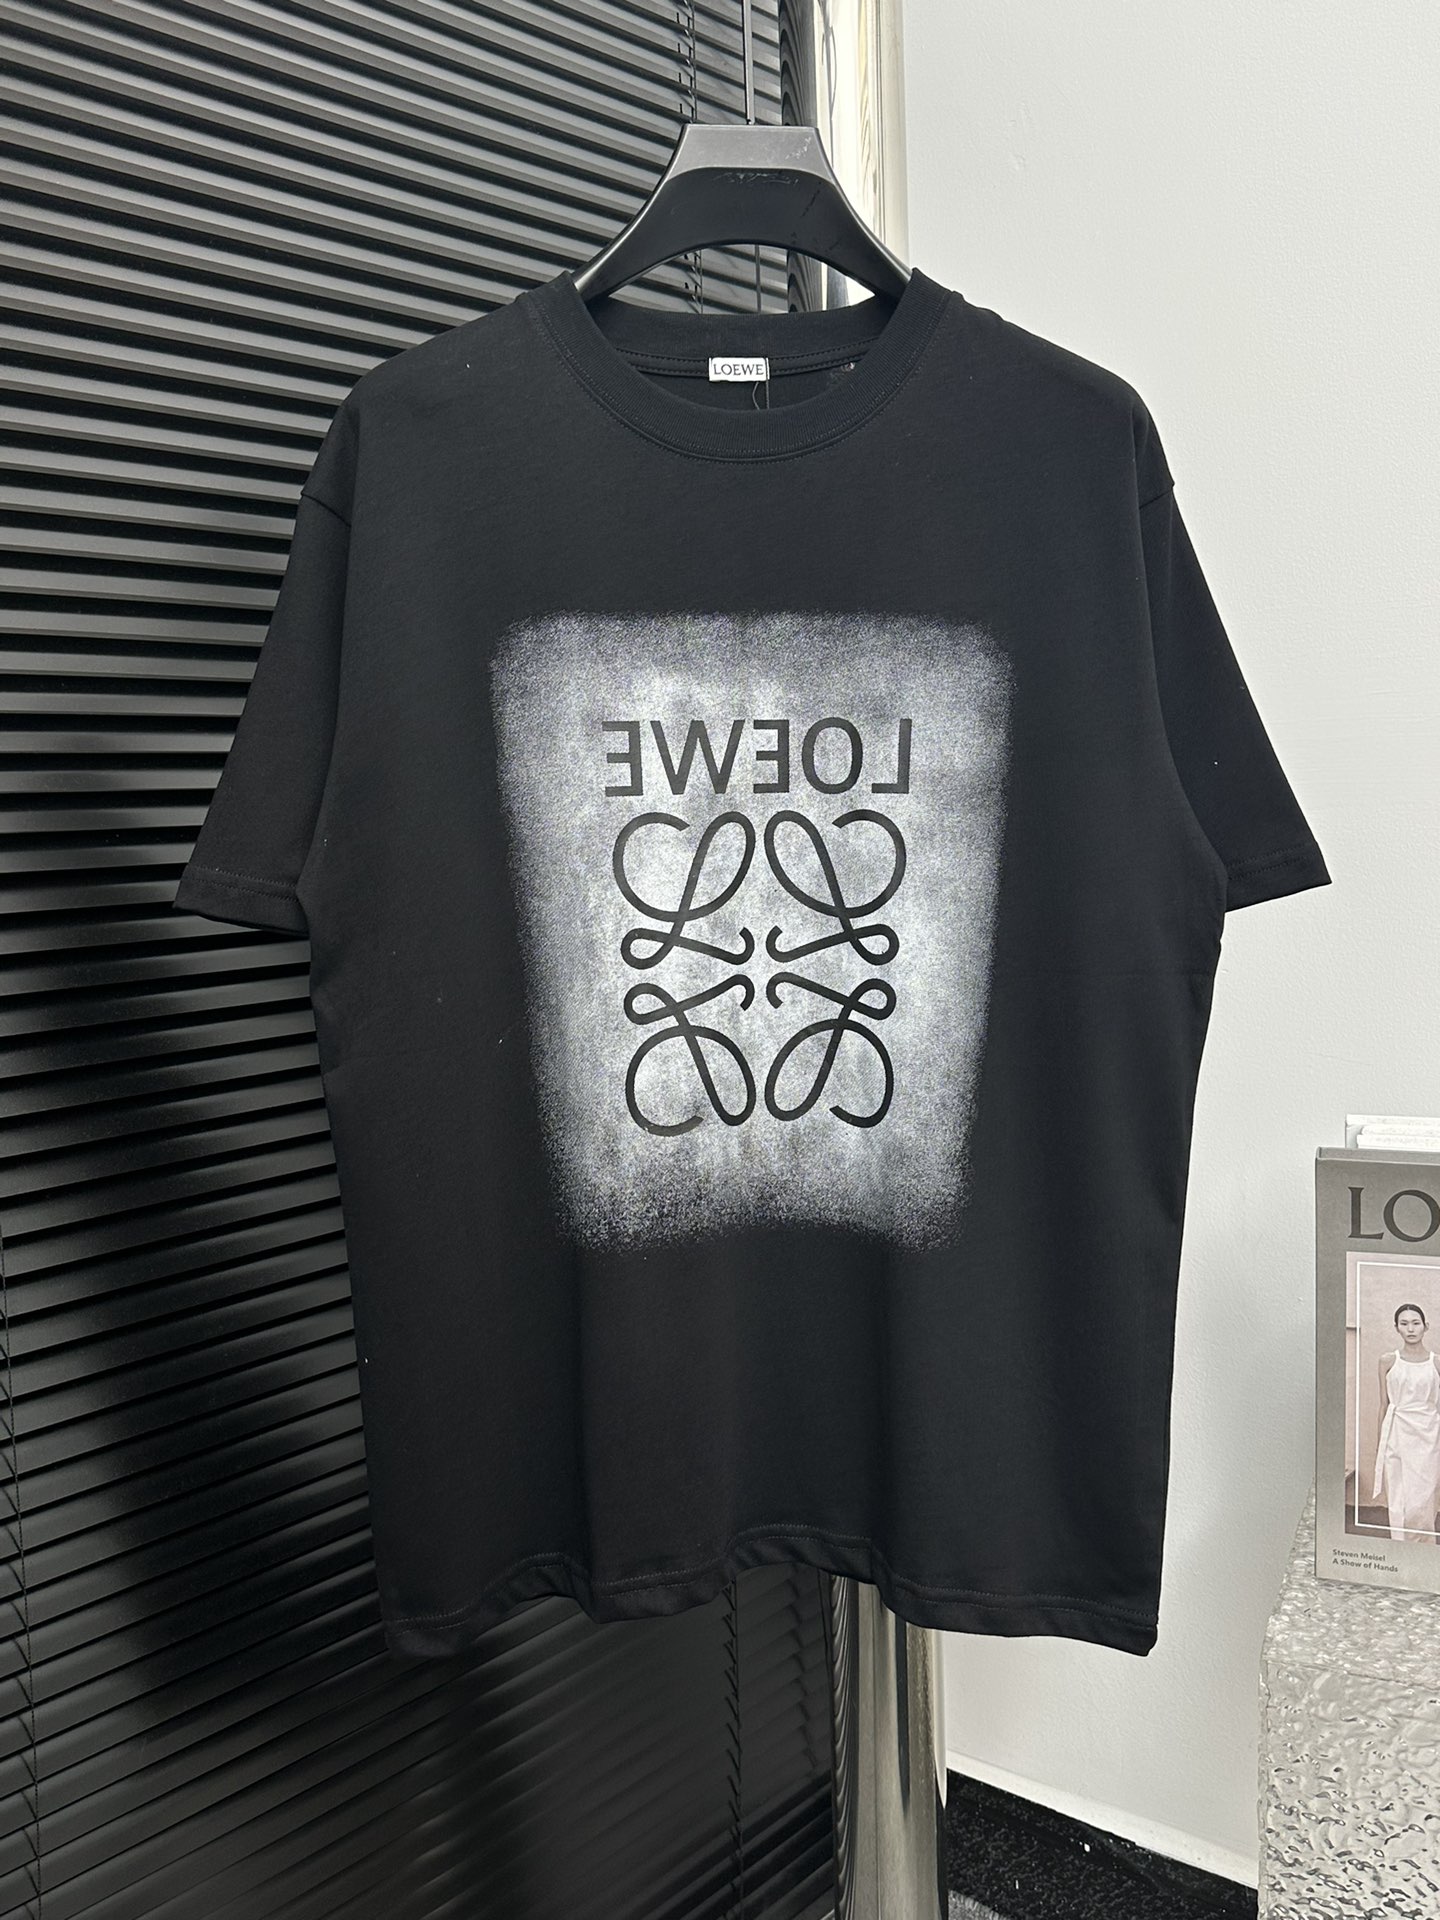 Loewe Clothing T-Shirt Black Grey Short Sleeve